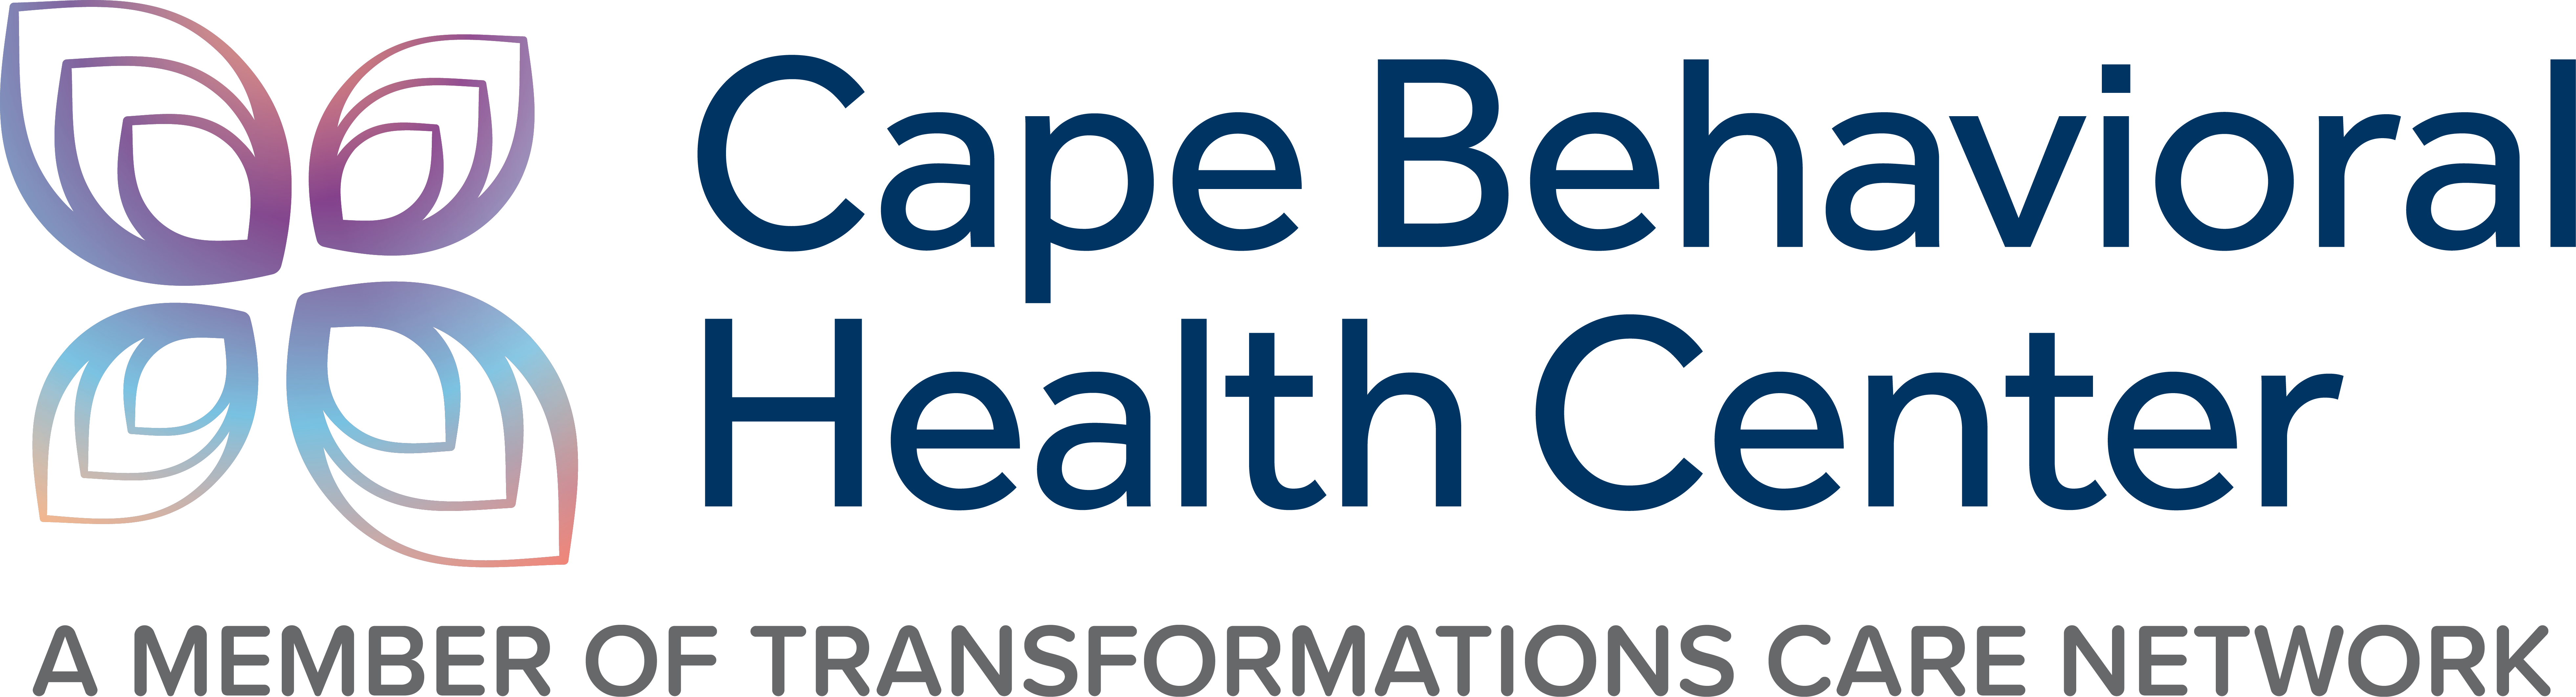 Cape Behavioral Health Center logo